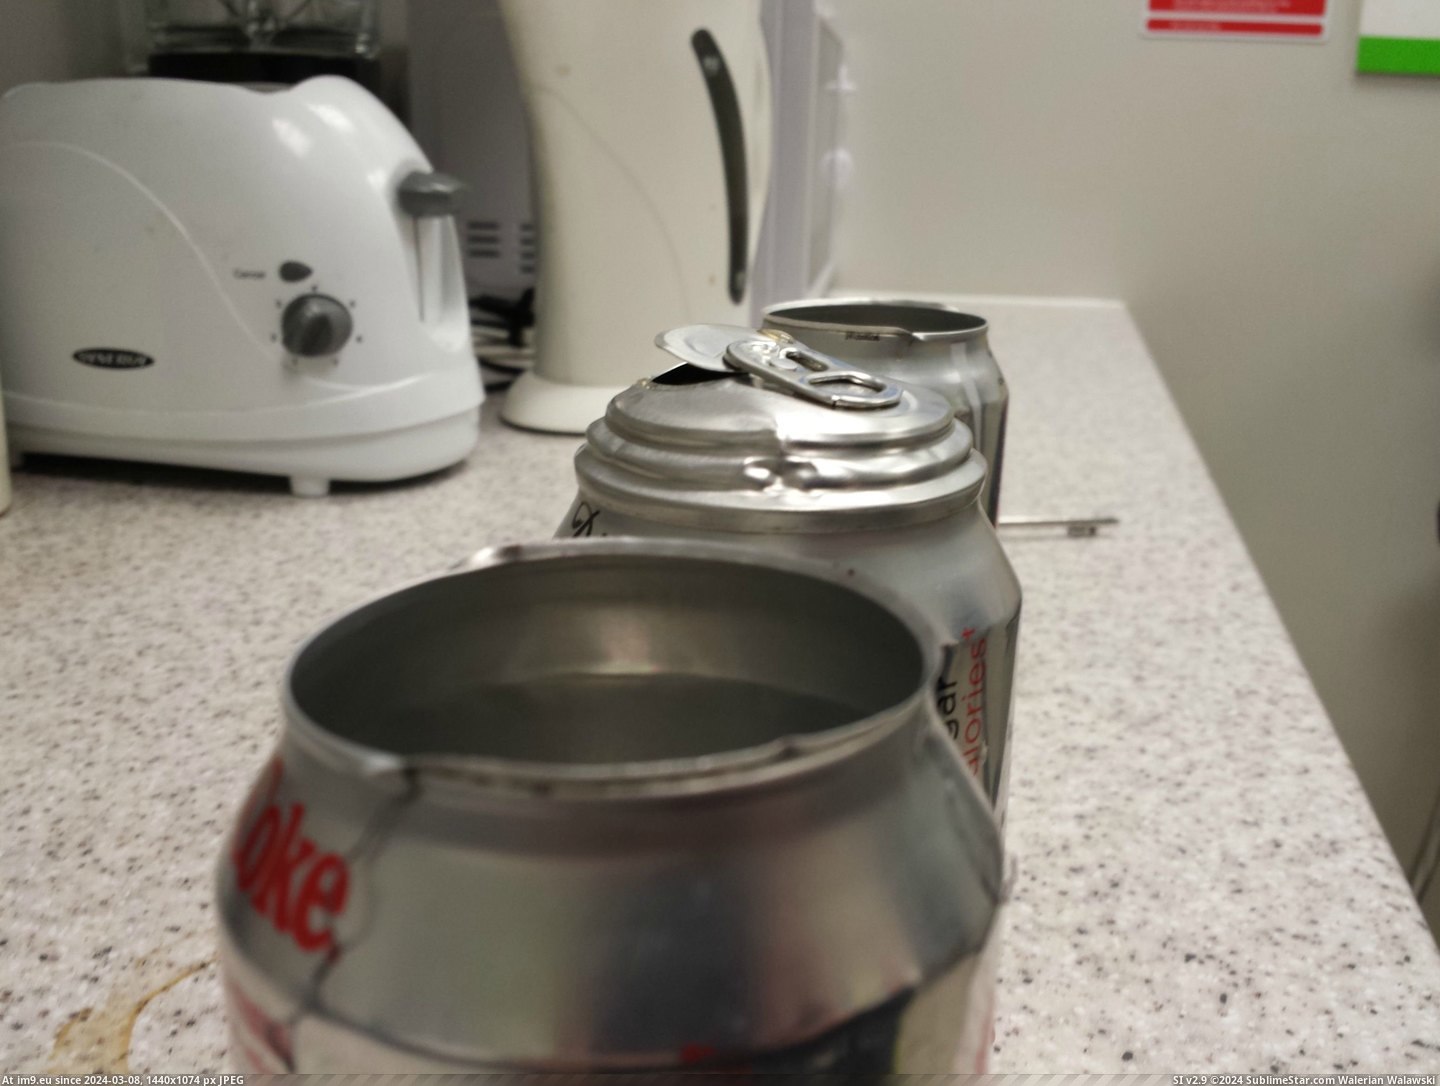 #Work #Way #Burst #Cans #Fridge [Mildlyinteresting] The cans in the fridge at work burst open in a way I've never seen 2 Pic. (Изображение из альбом My r/MILDLYINTERESTING favs))